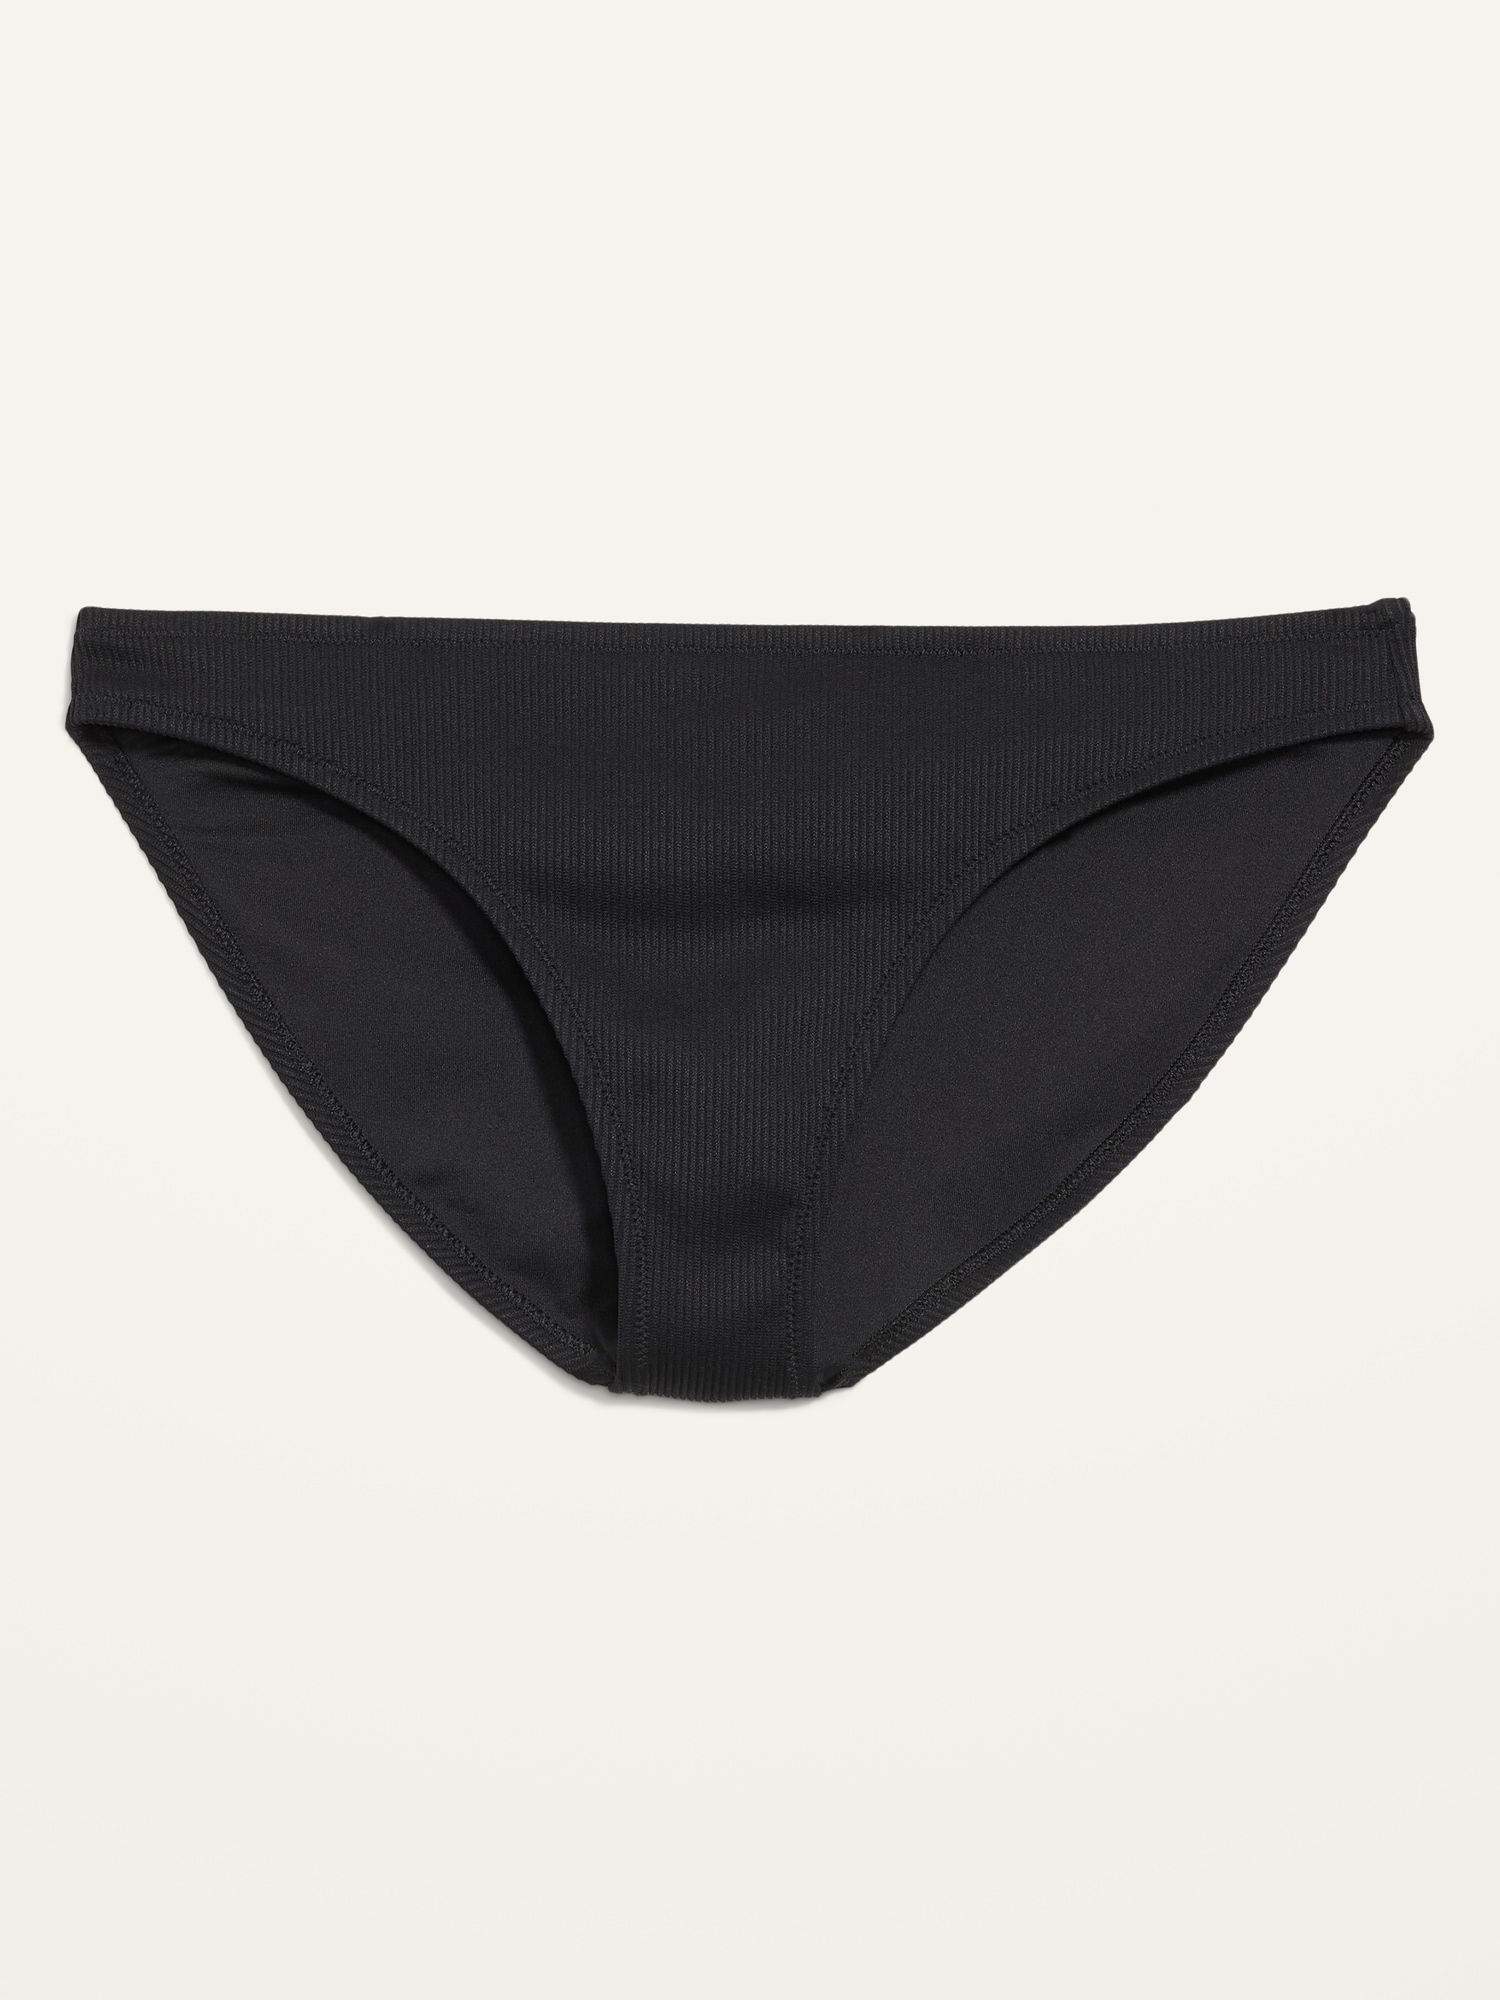 Low-Rise Classic Rib-Knit Bikini Swim Bottoms for Women | Old Navy